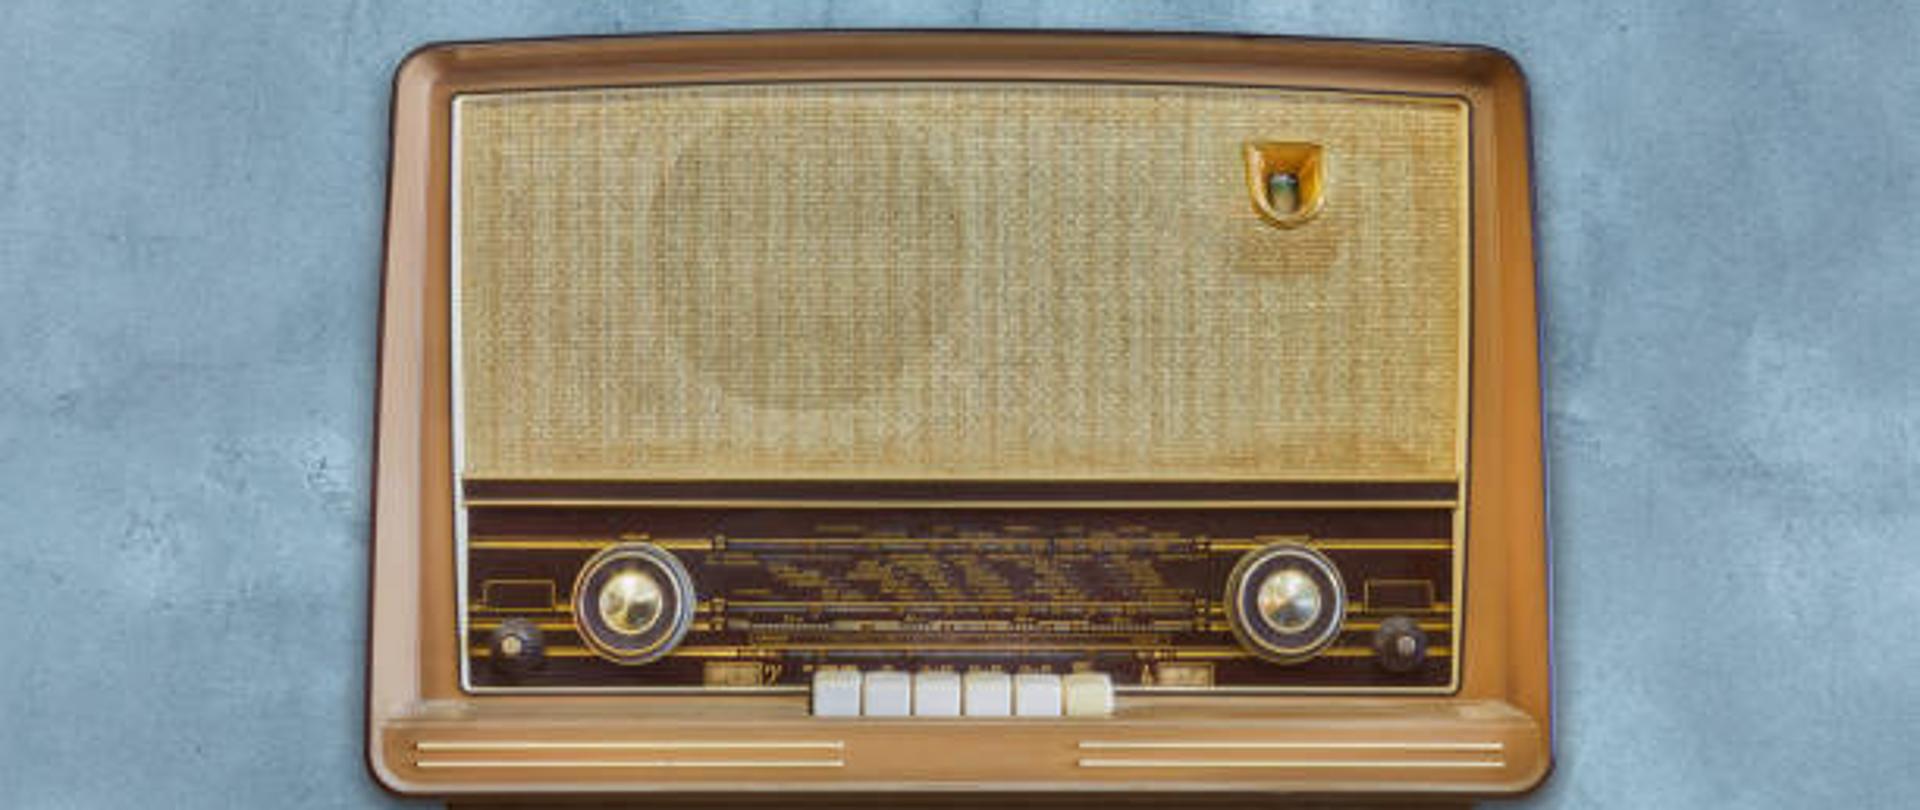 Stare radio retro studio On Air wklejone na szare tło